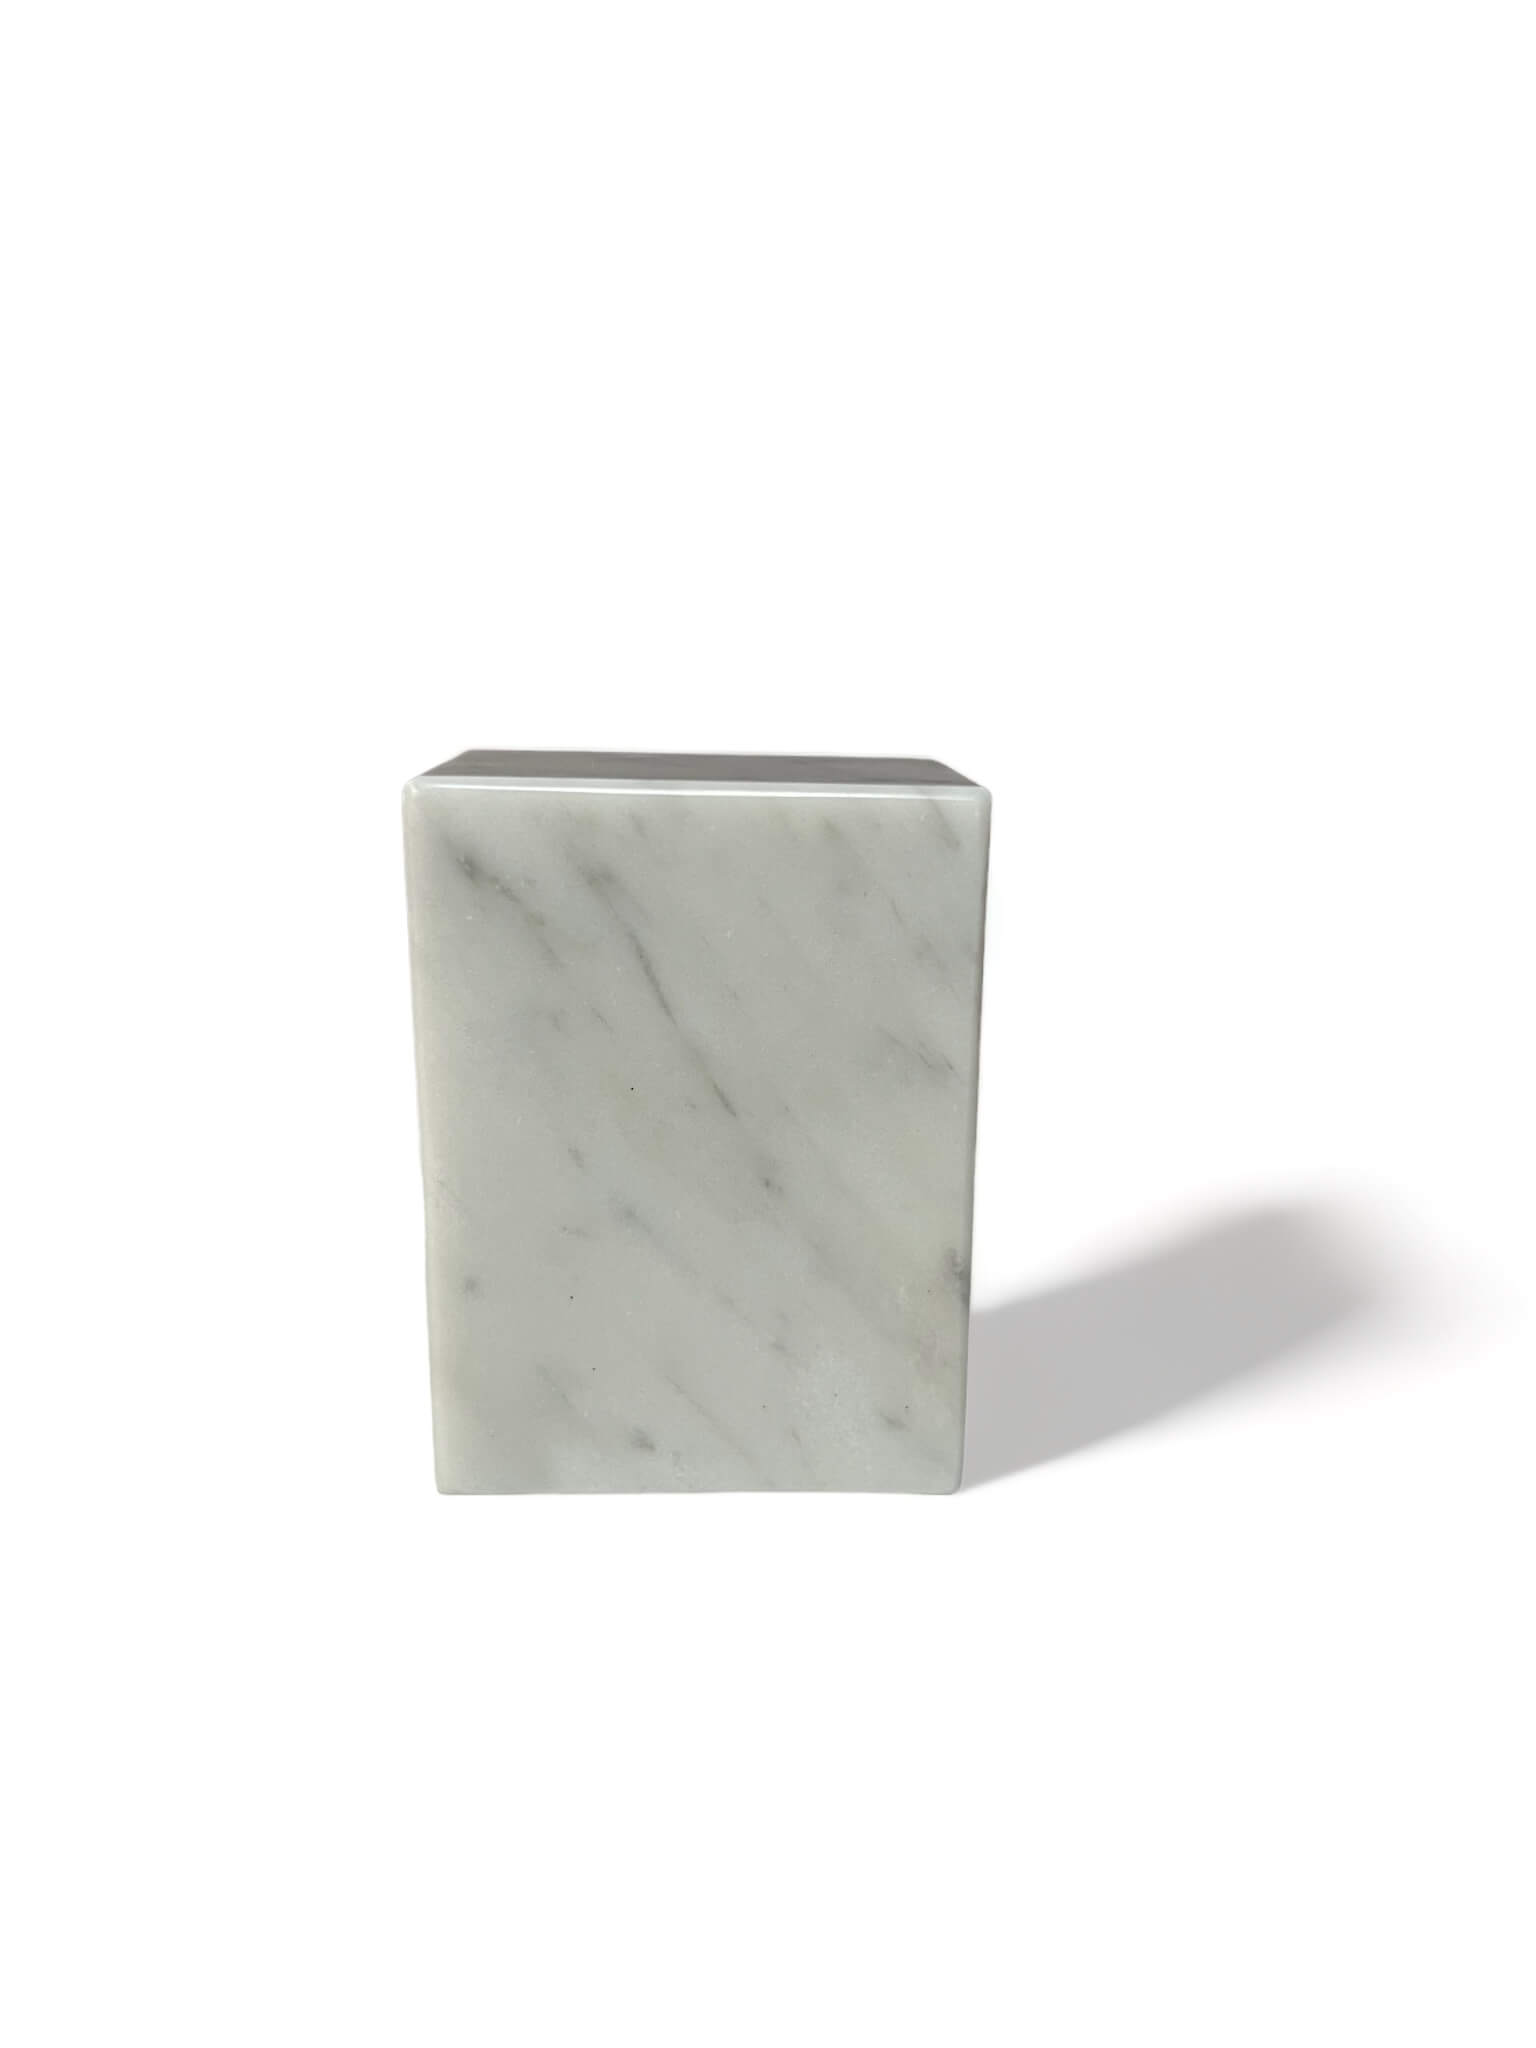 Carrara white marble base 4x3x2